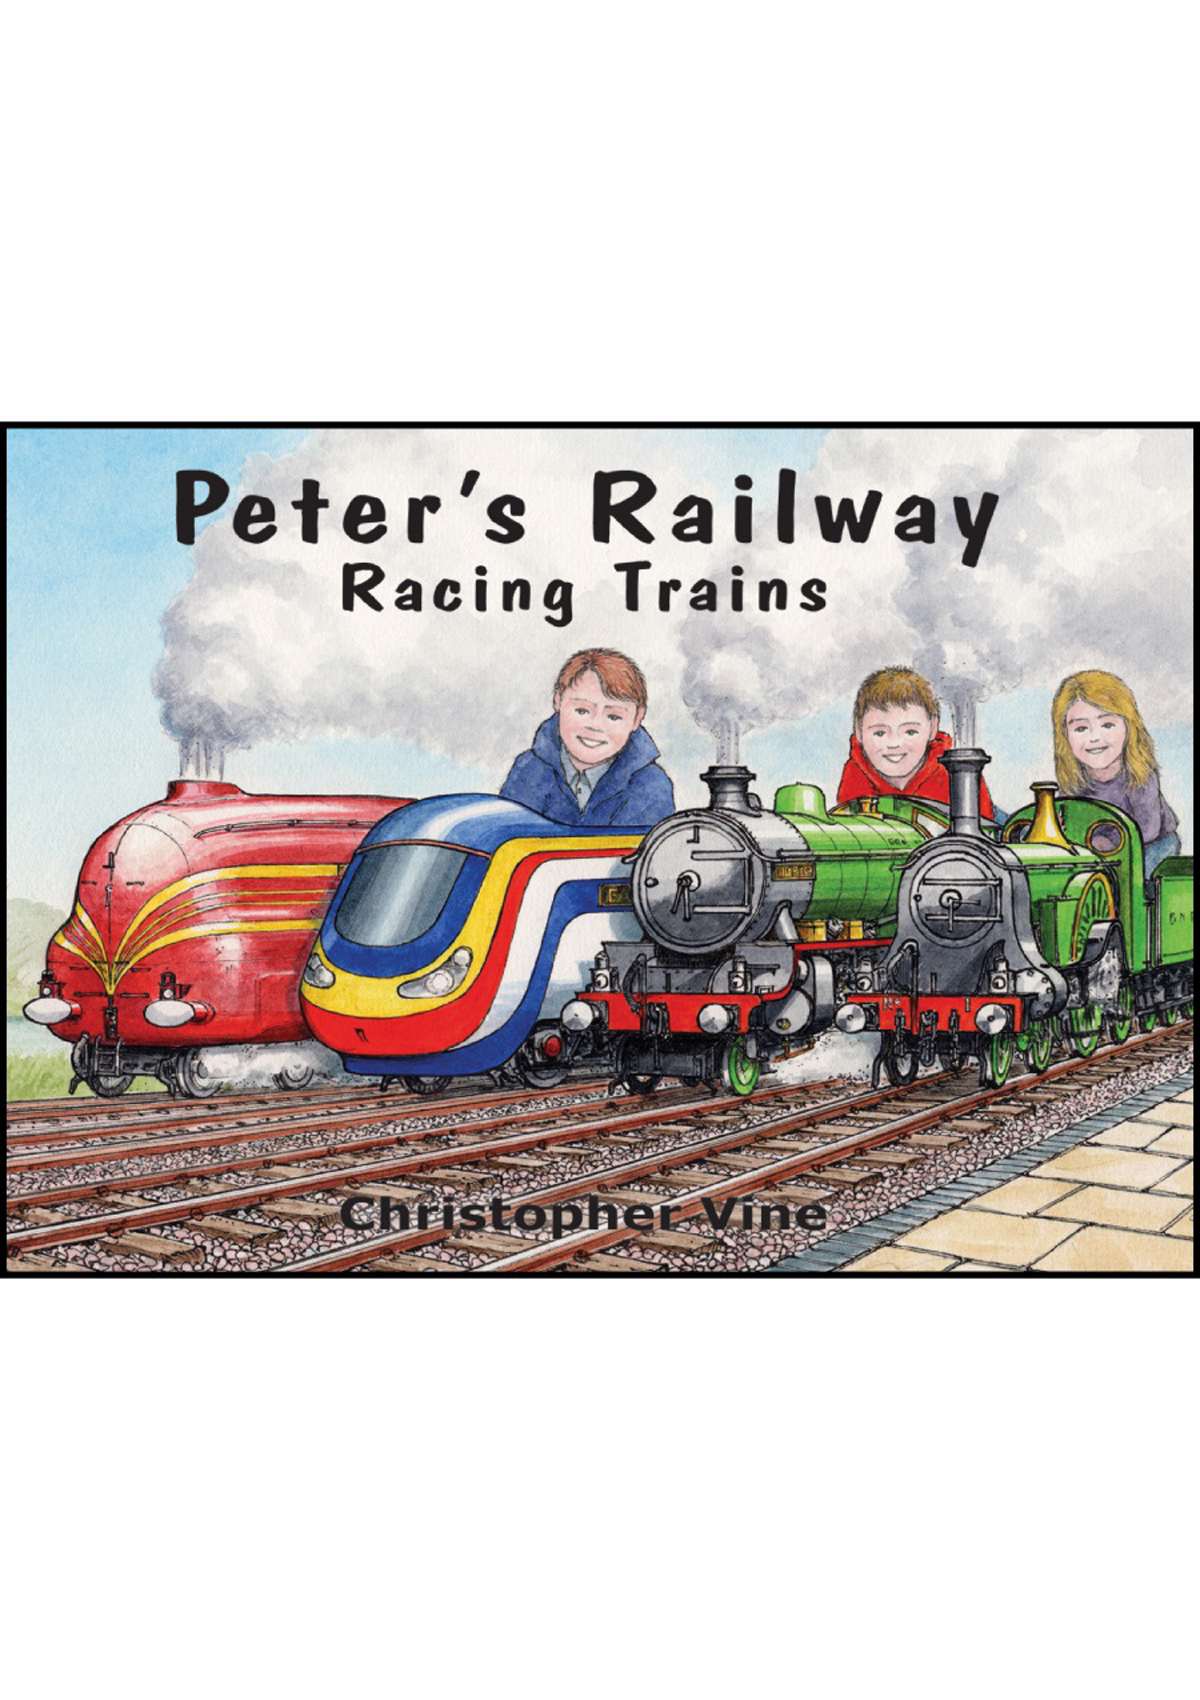 Book - Peter's Railway Racing Trains
